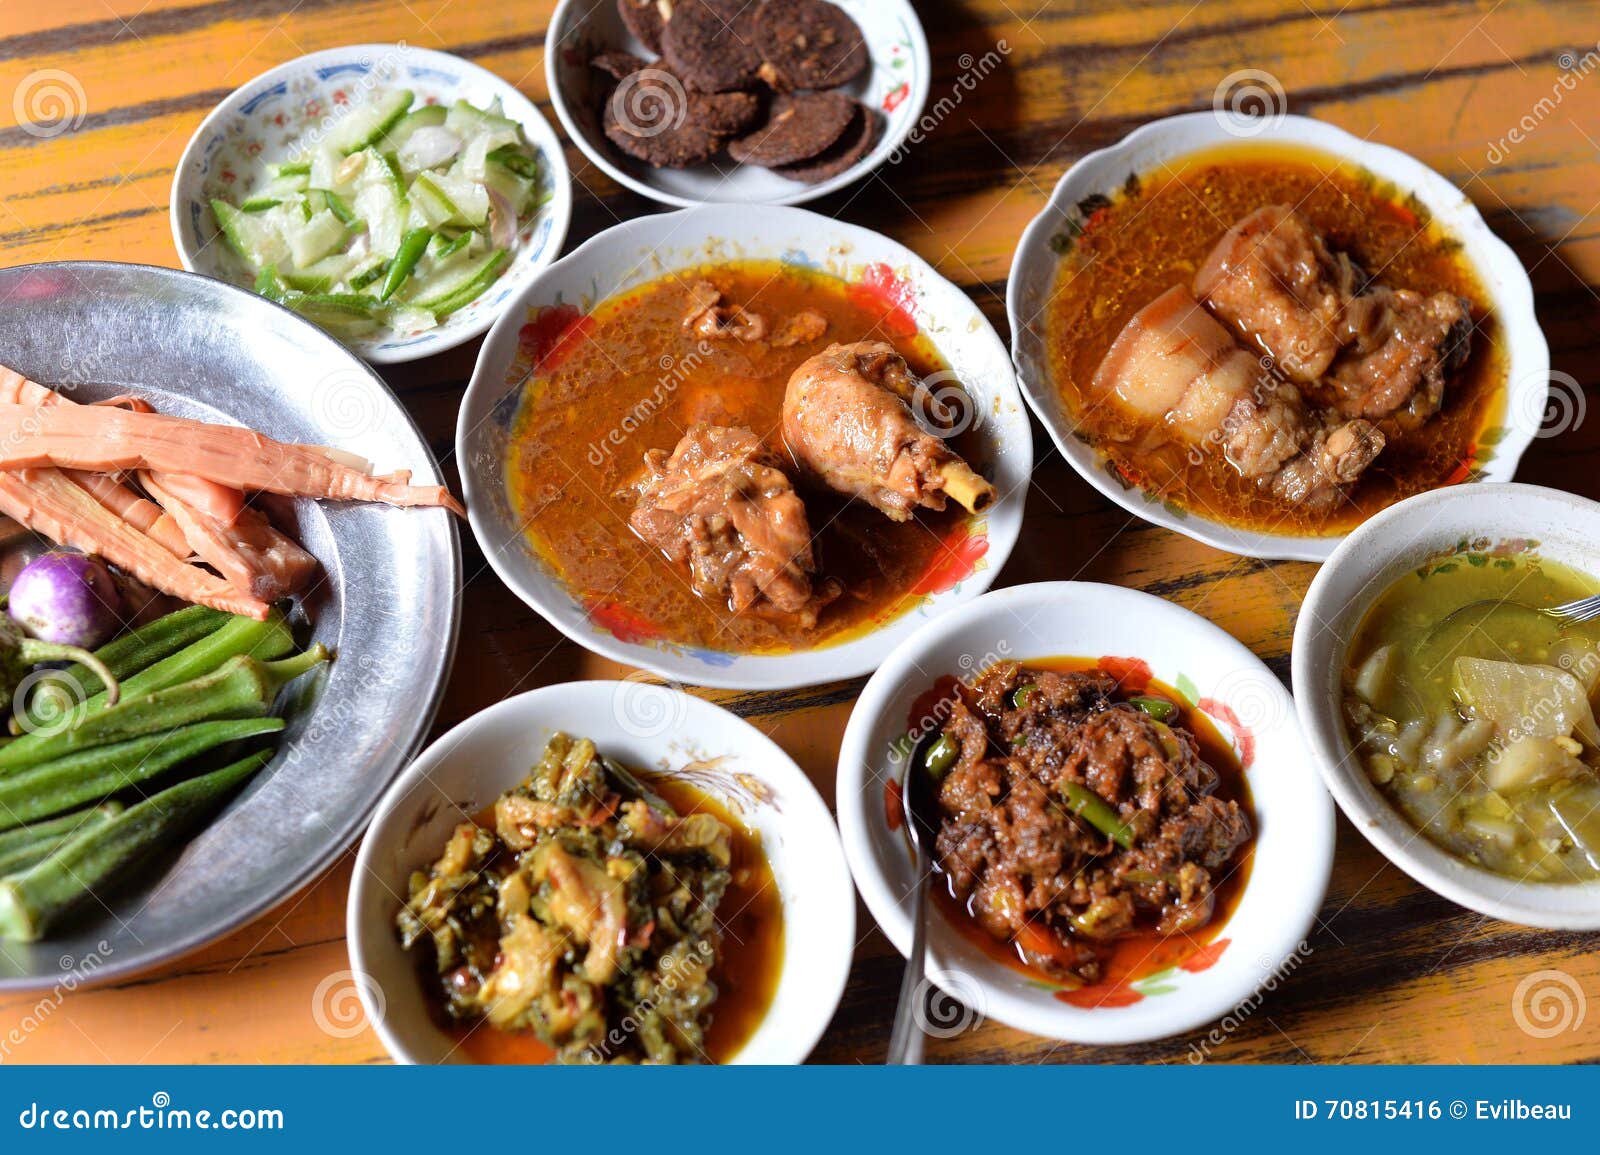 myanmar food set